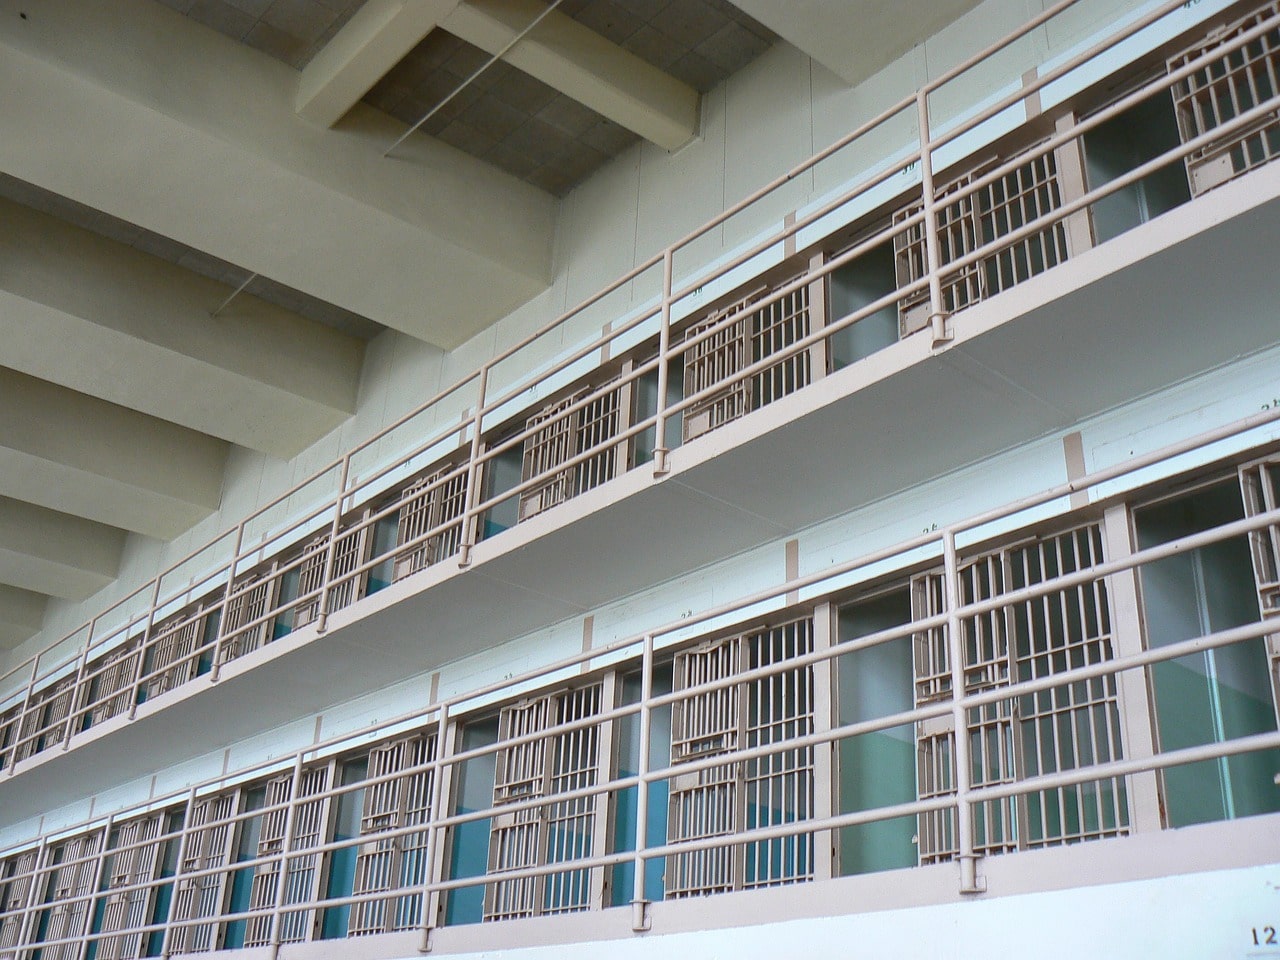 Arti Mimpi Masuk Penjara, Sebuah Penafsiran Simbolik untuk Merenungkan Diri